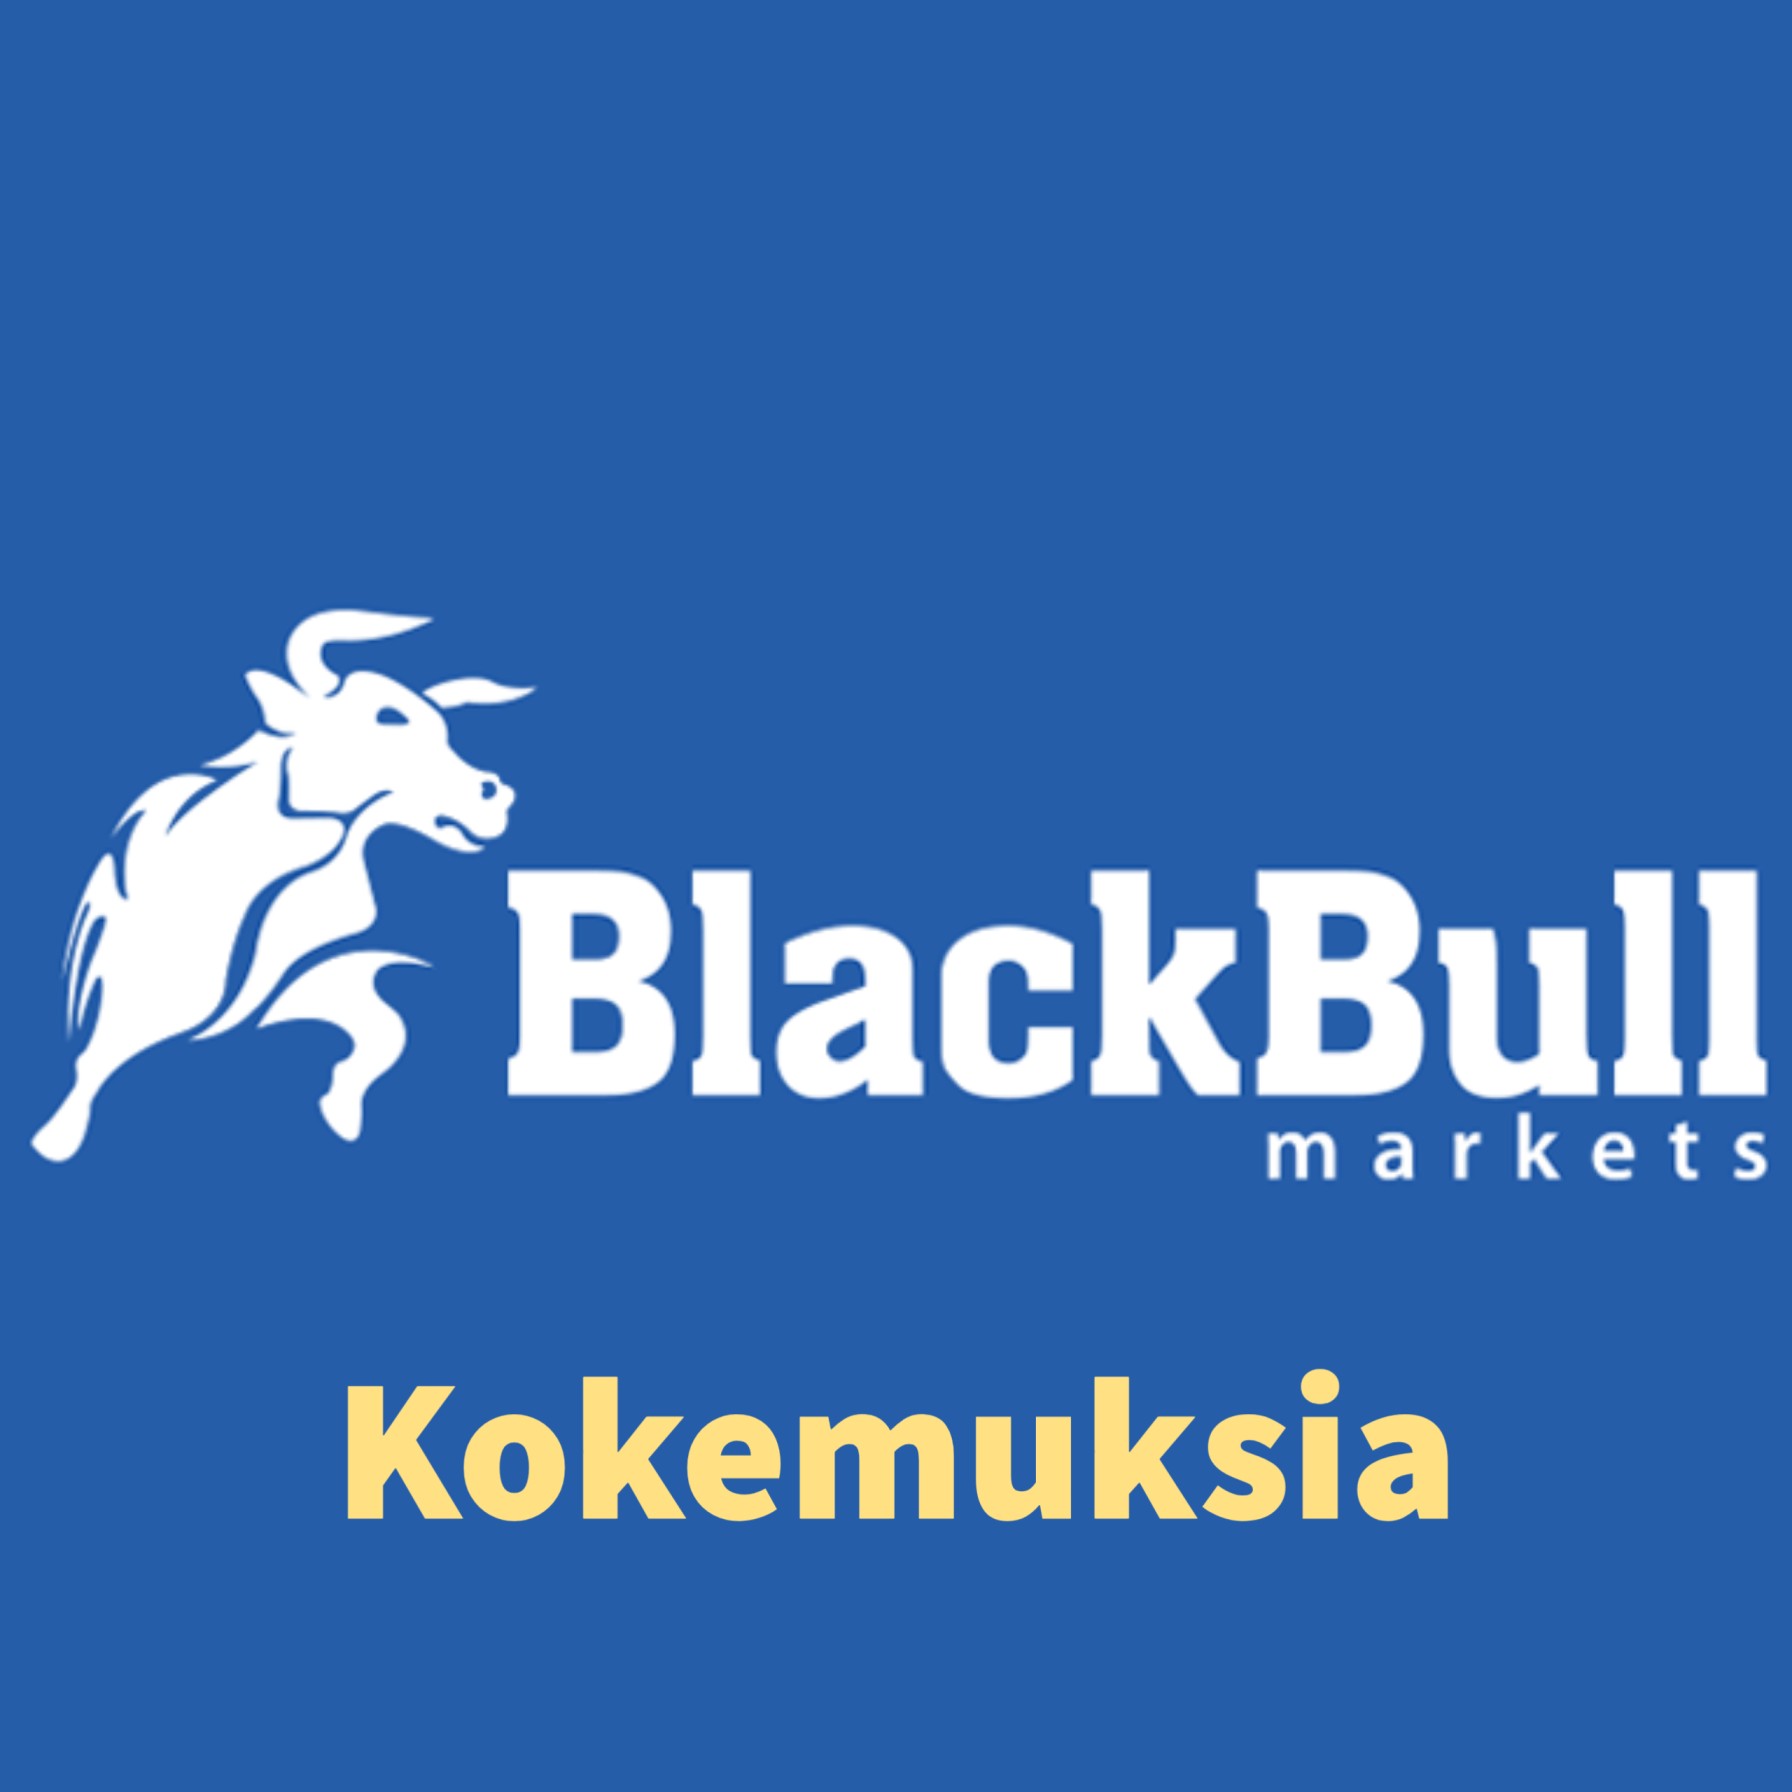 Blackbull Markets kokemuksia (1)